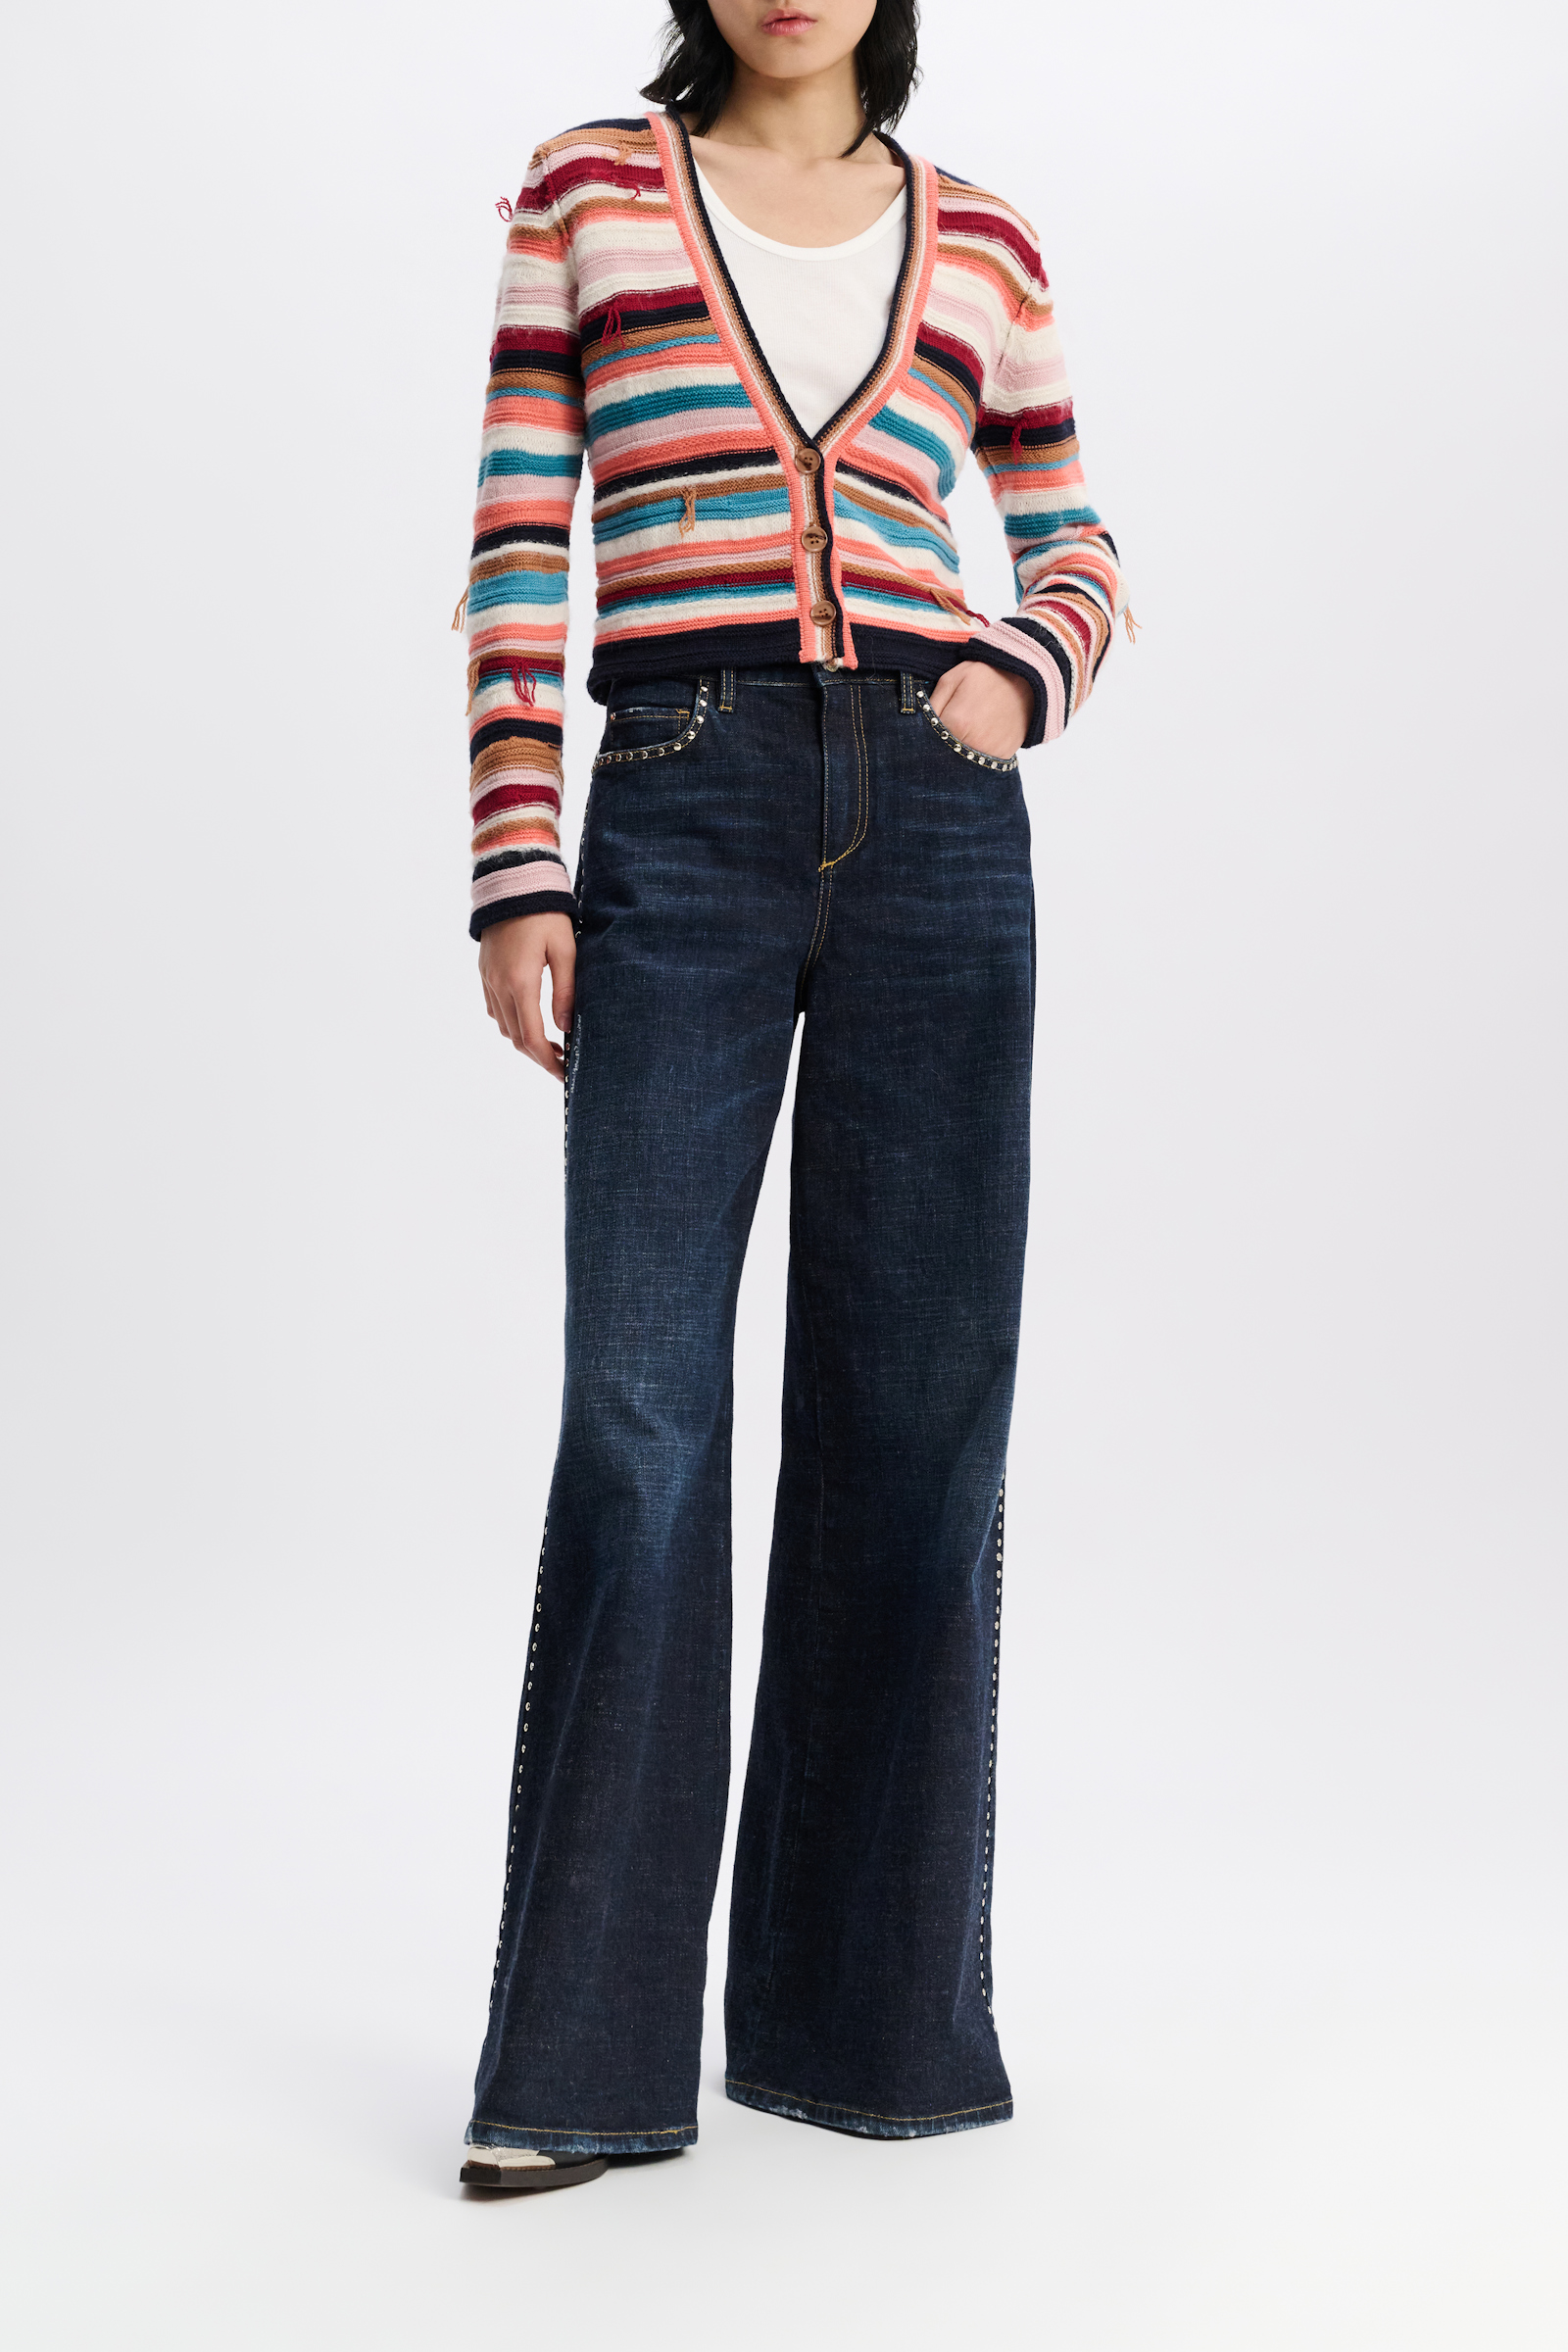 Dorothee Schumacher Striped mixed knit V-neck cardigan multicolor stripe